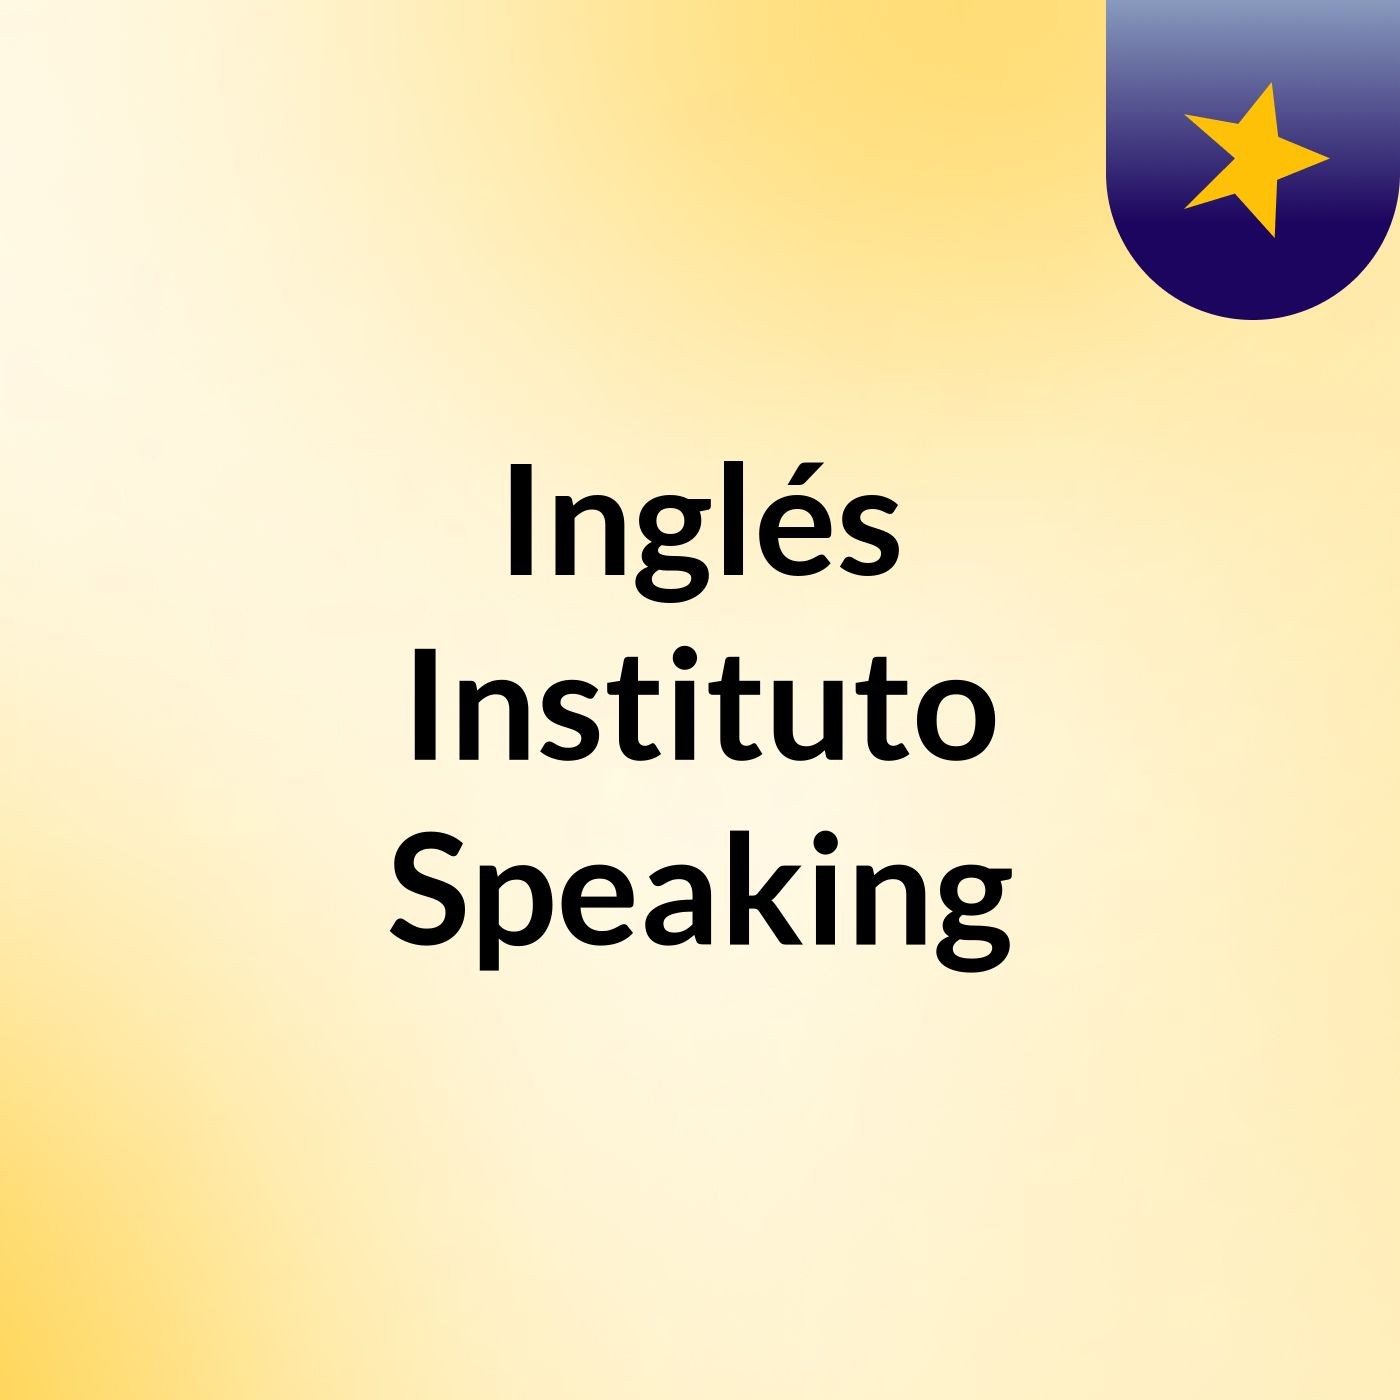 Inglés Instituto Speaking